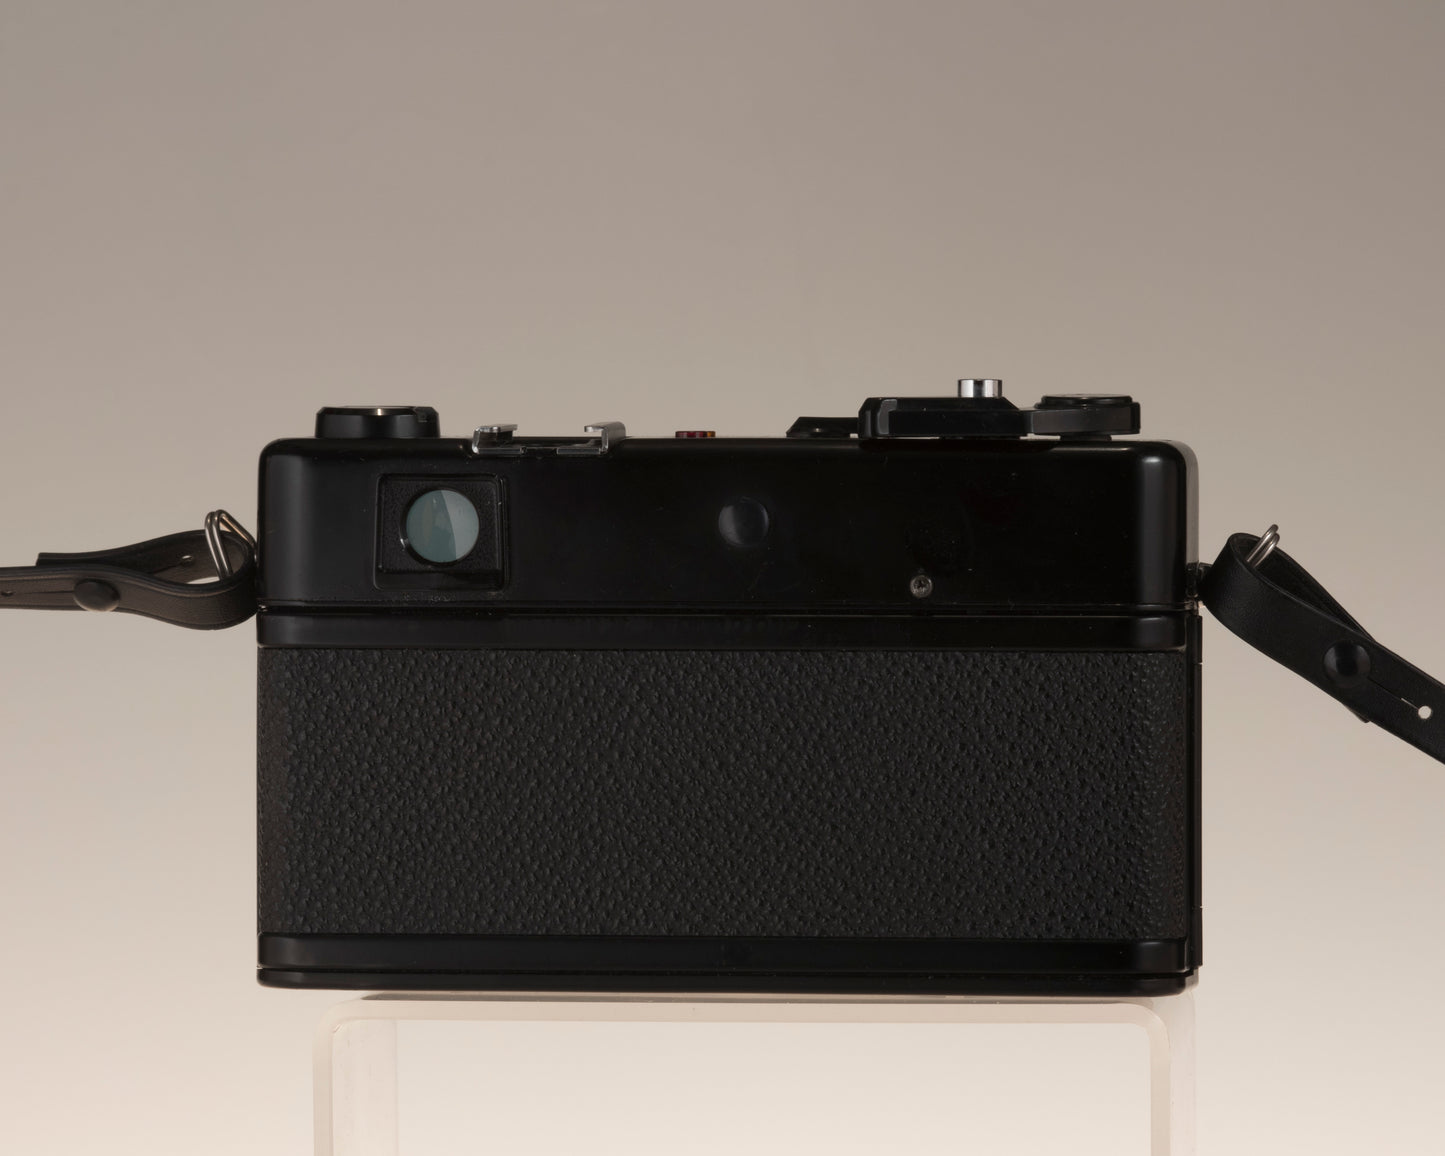 Yashica MG-1 rangefinder 35mm camera